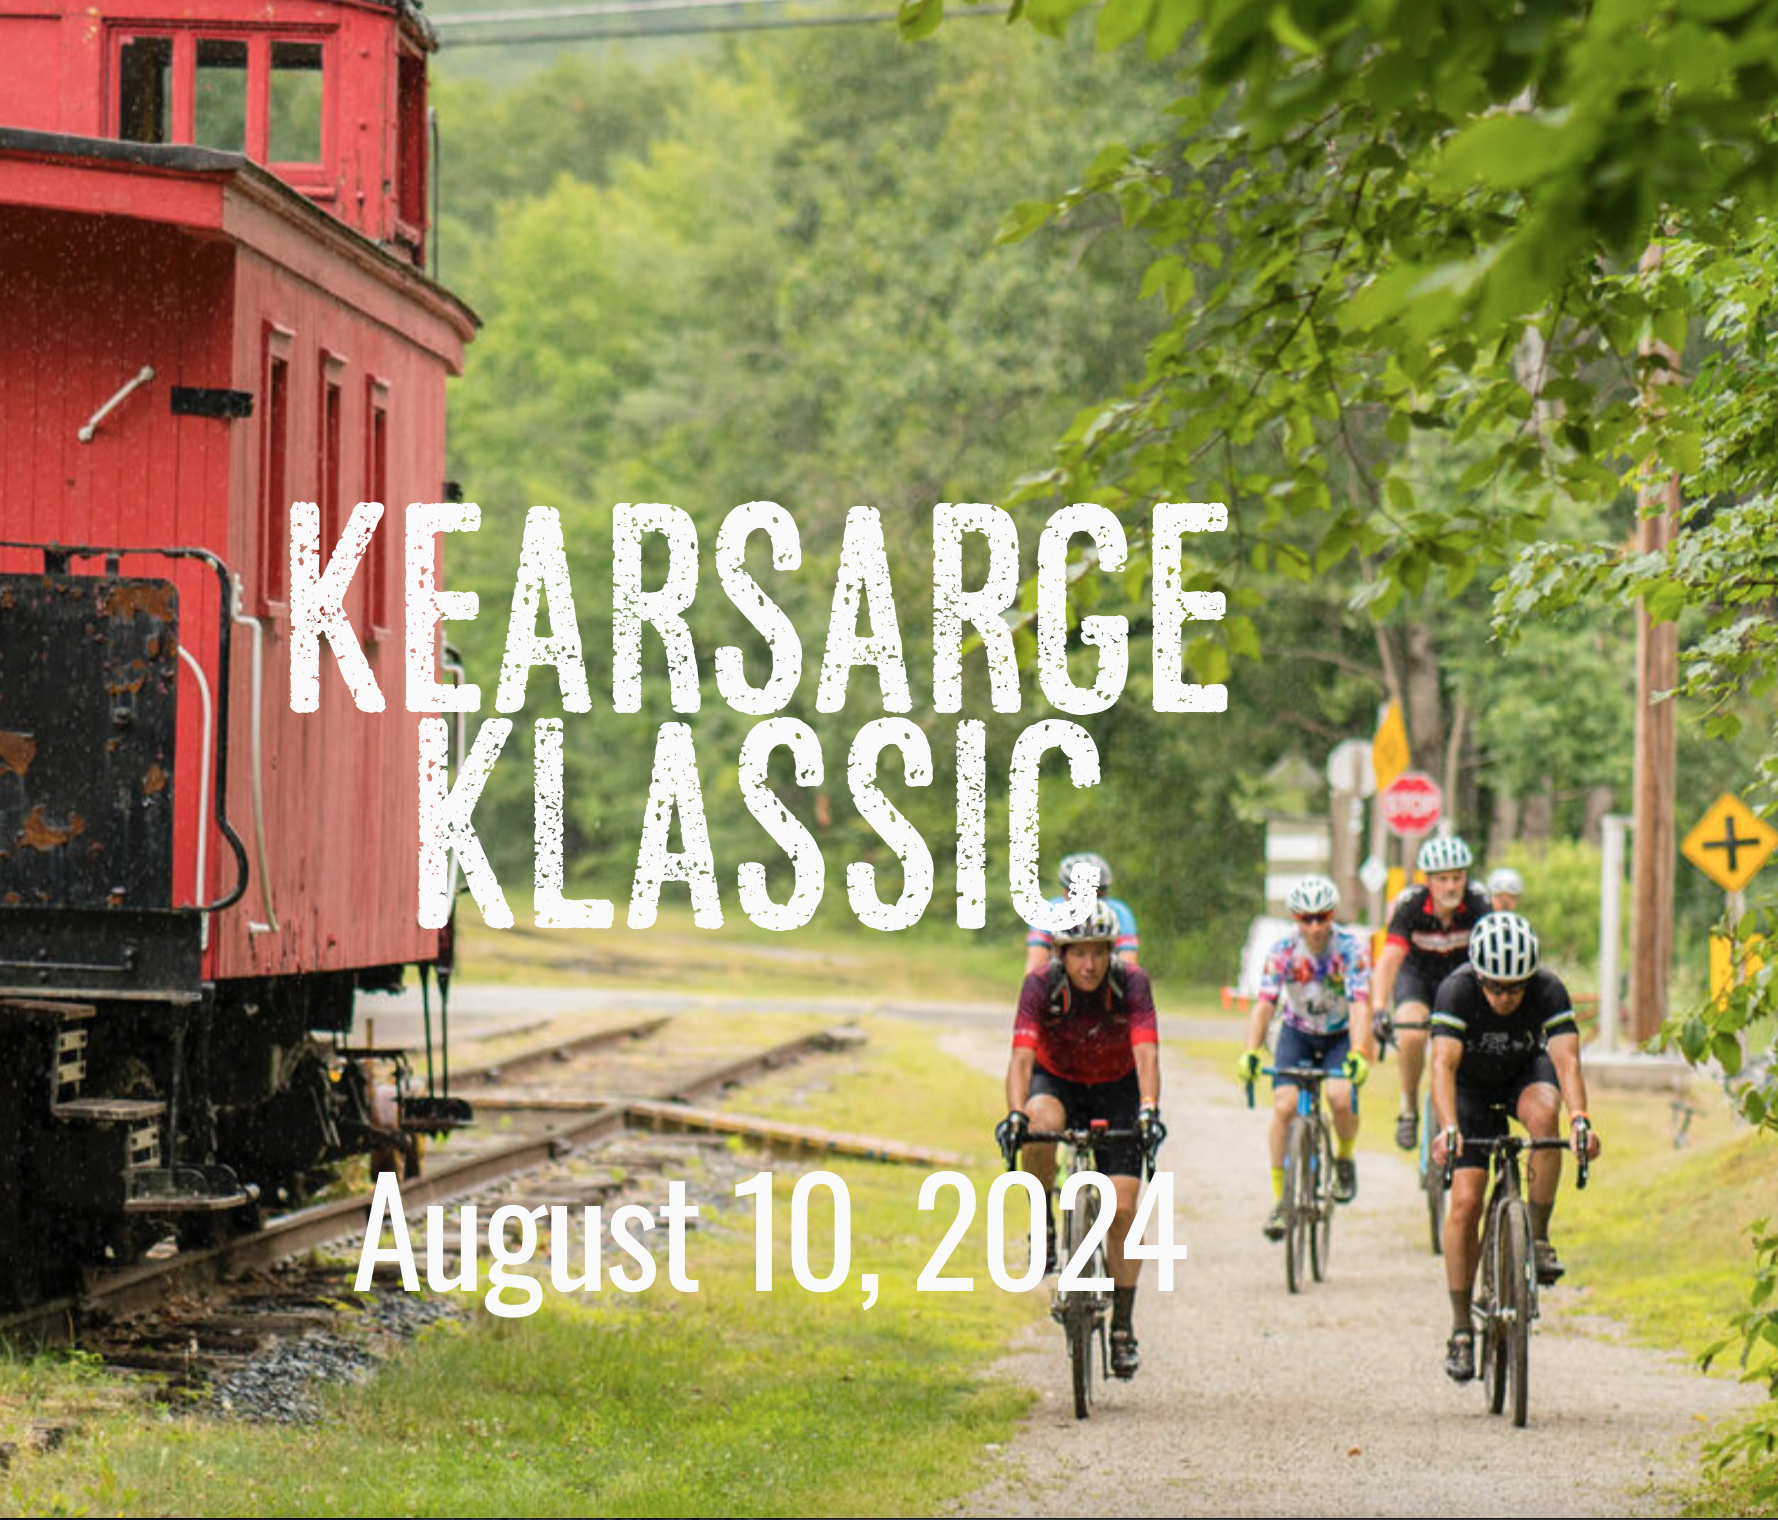 Kearsarge classic gravel ride image